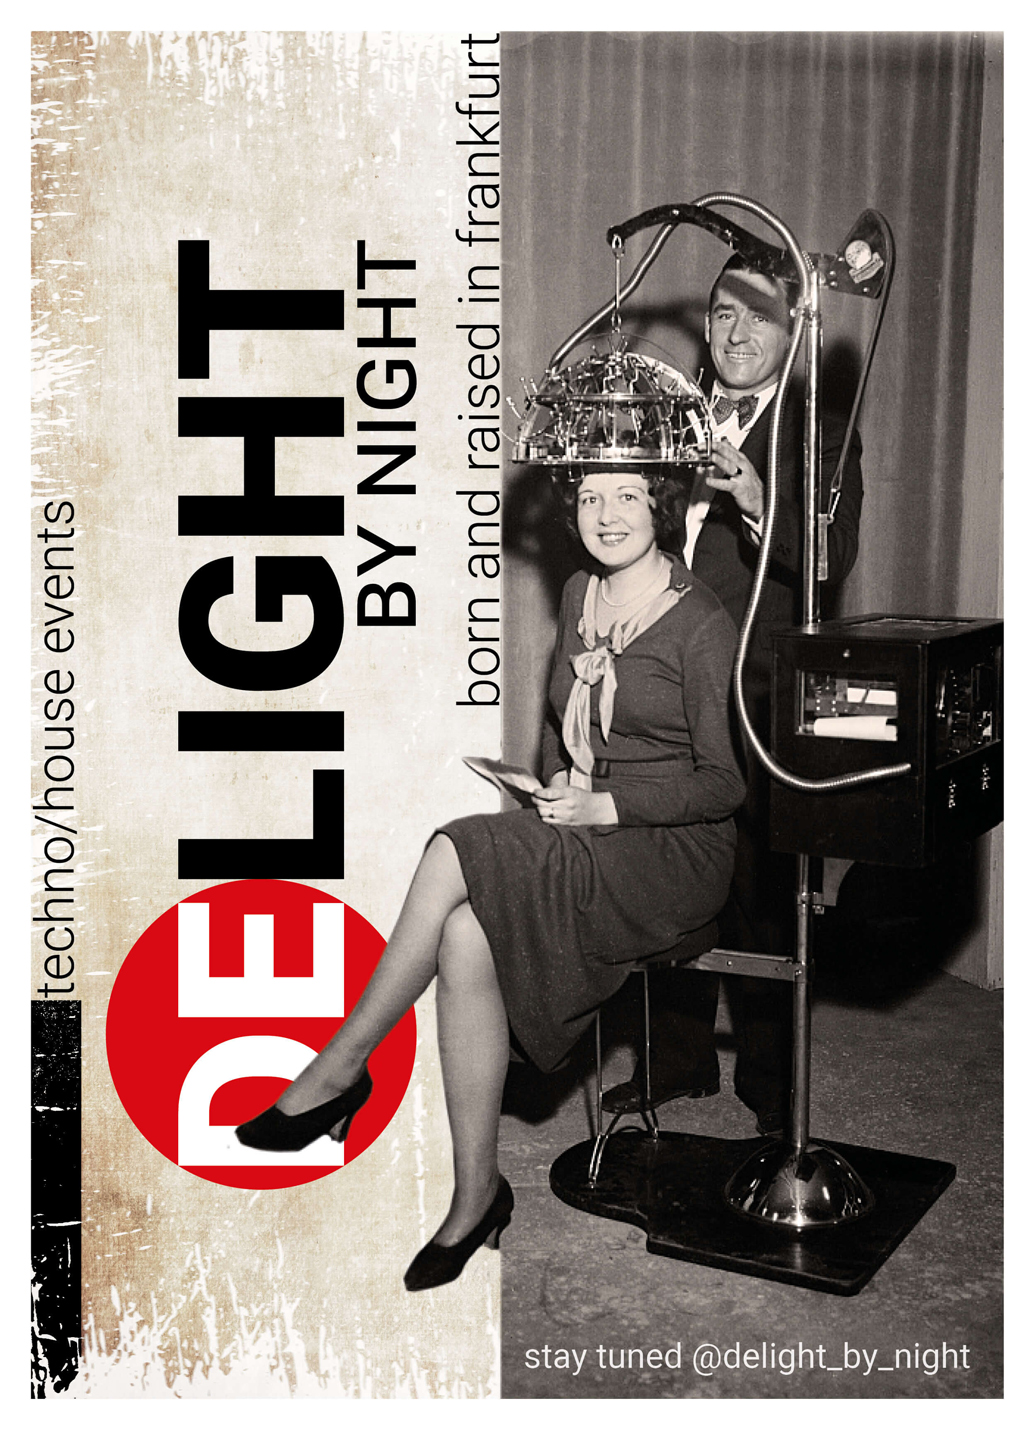 Delight by night - Techno-Kollektiv